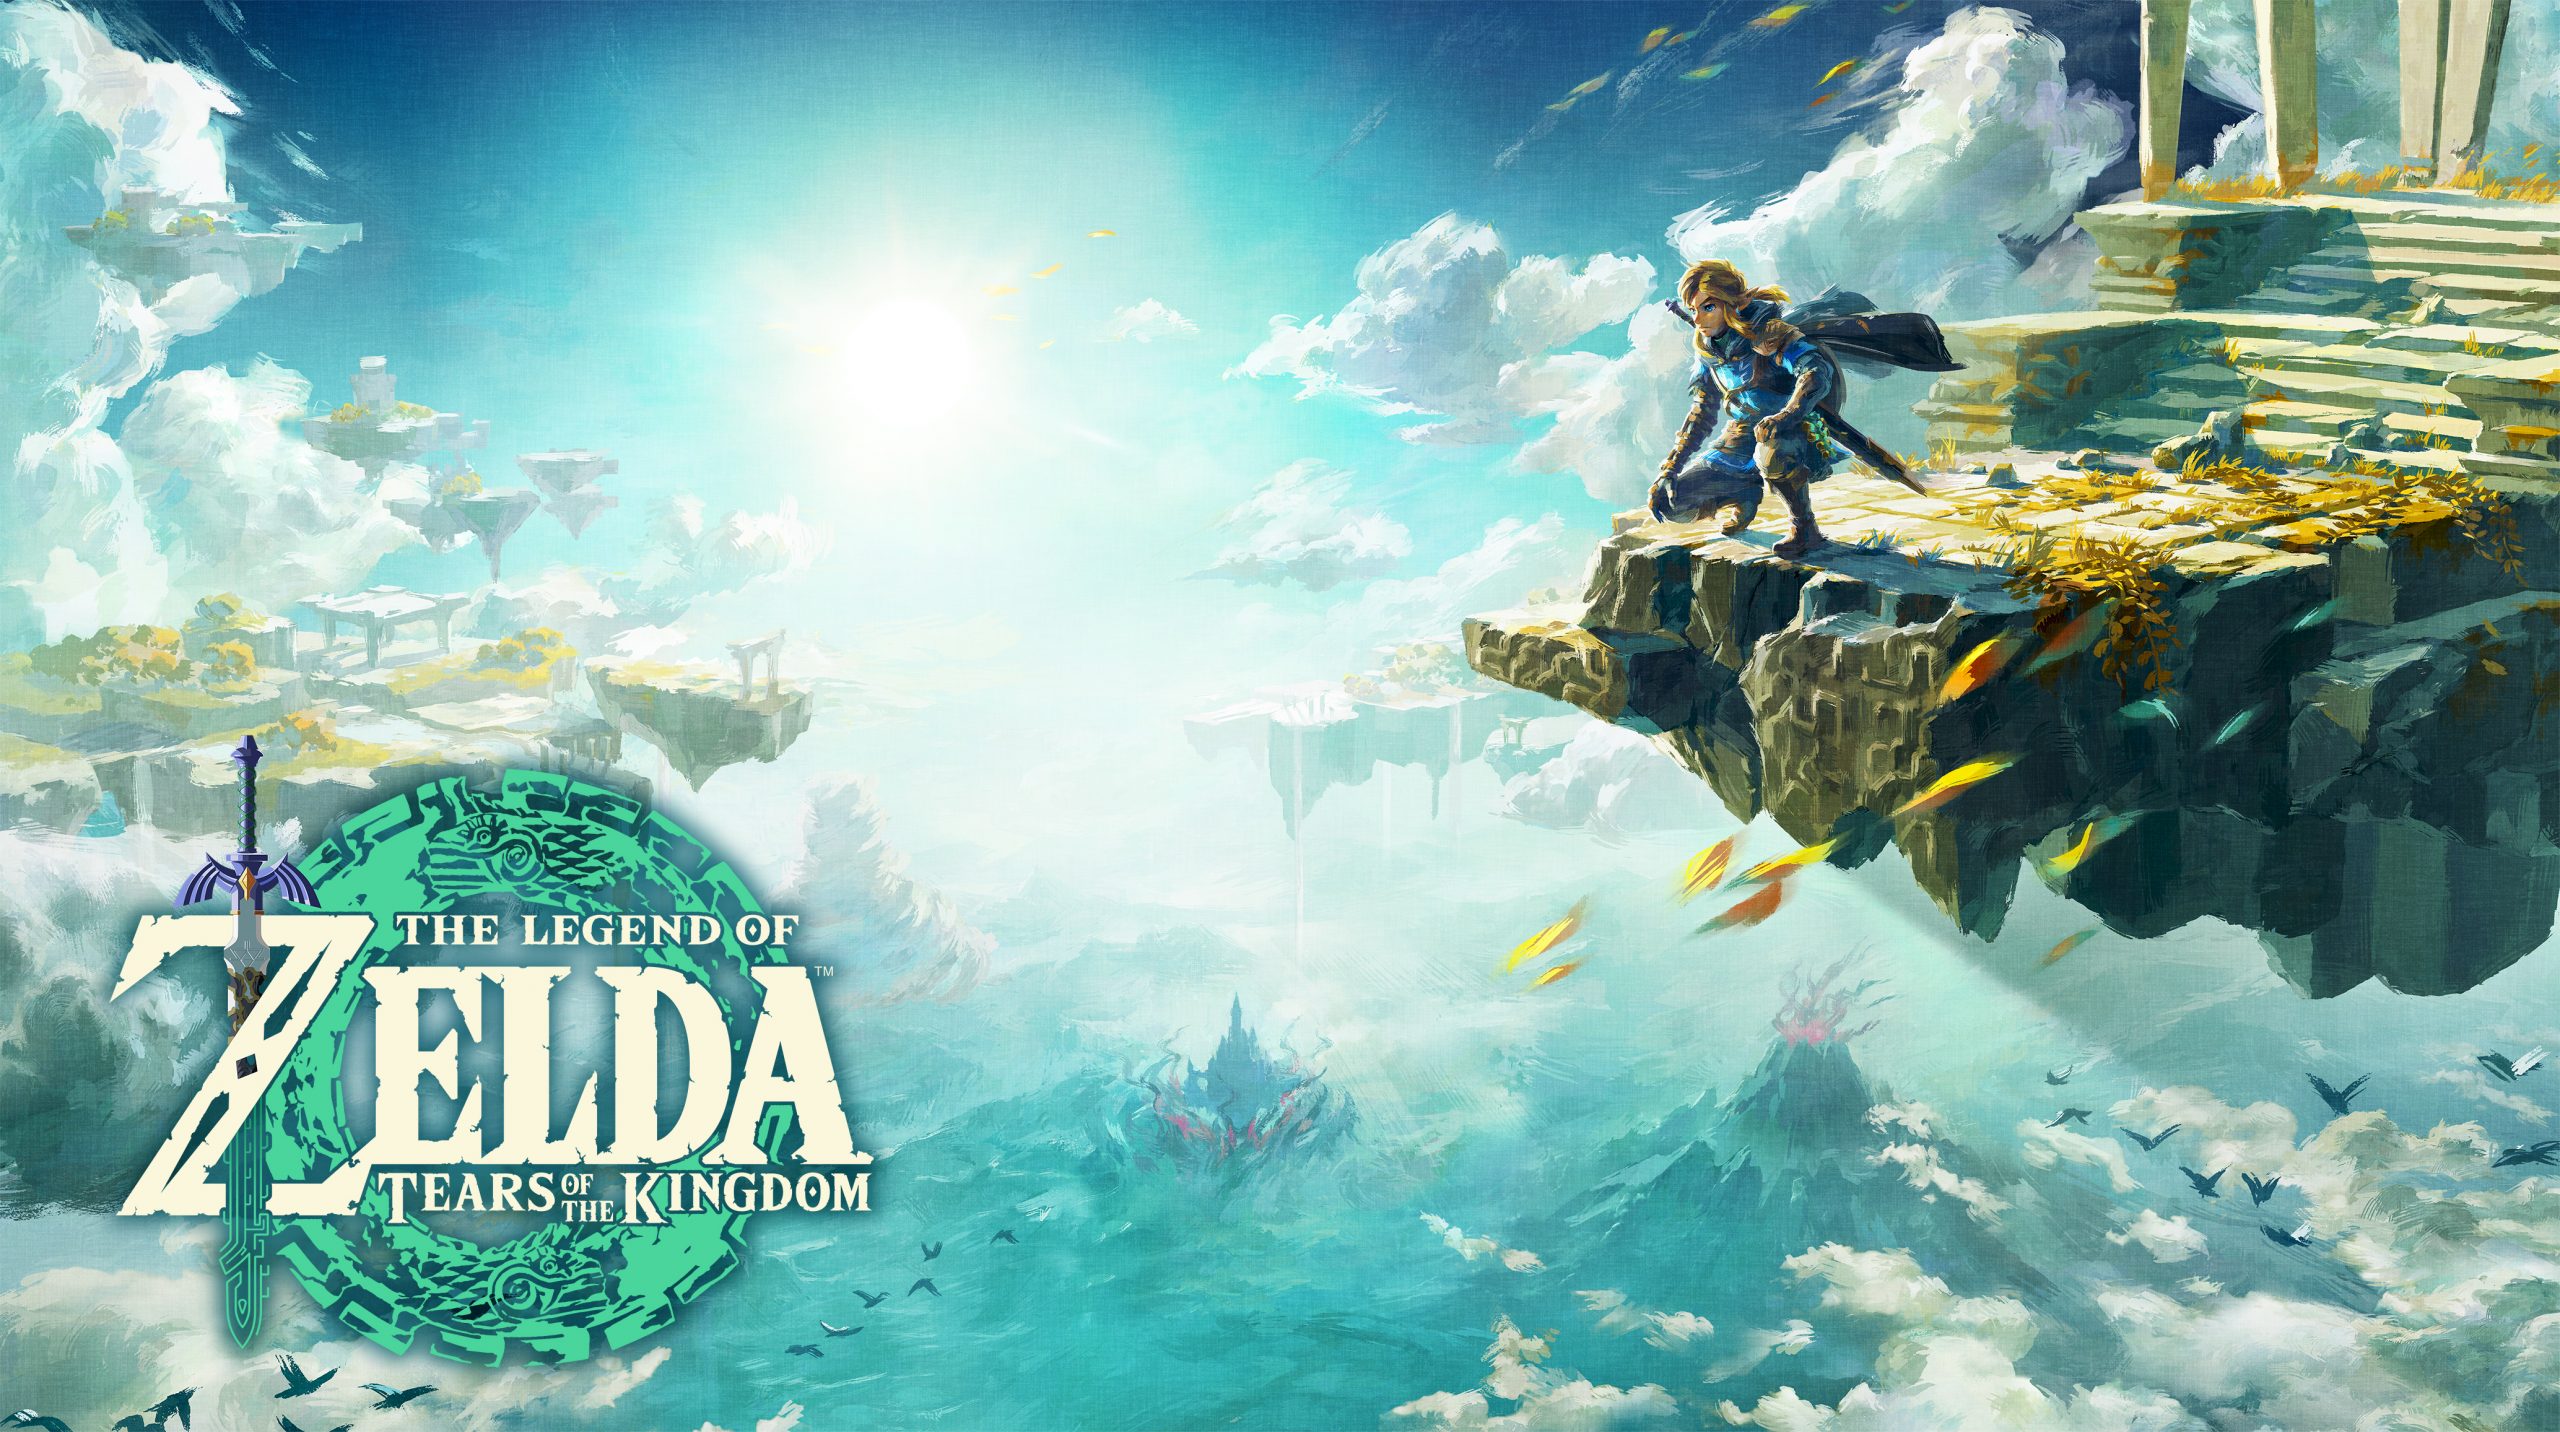 The Legend of Zelda Breath of the Wild Gameplay Walkthrough Part 1